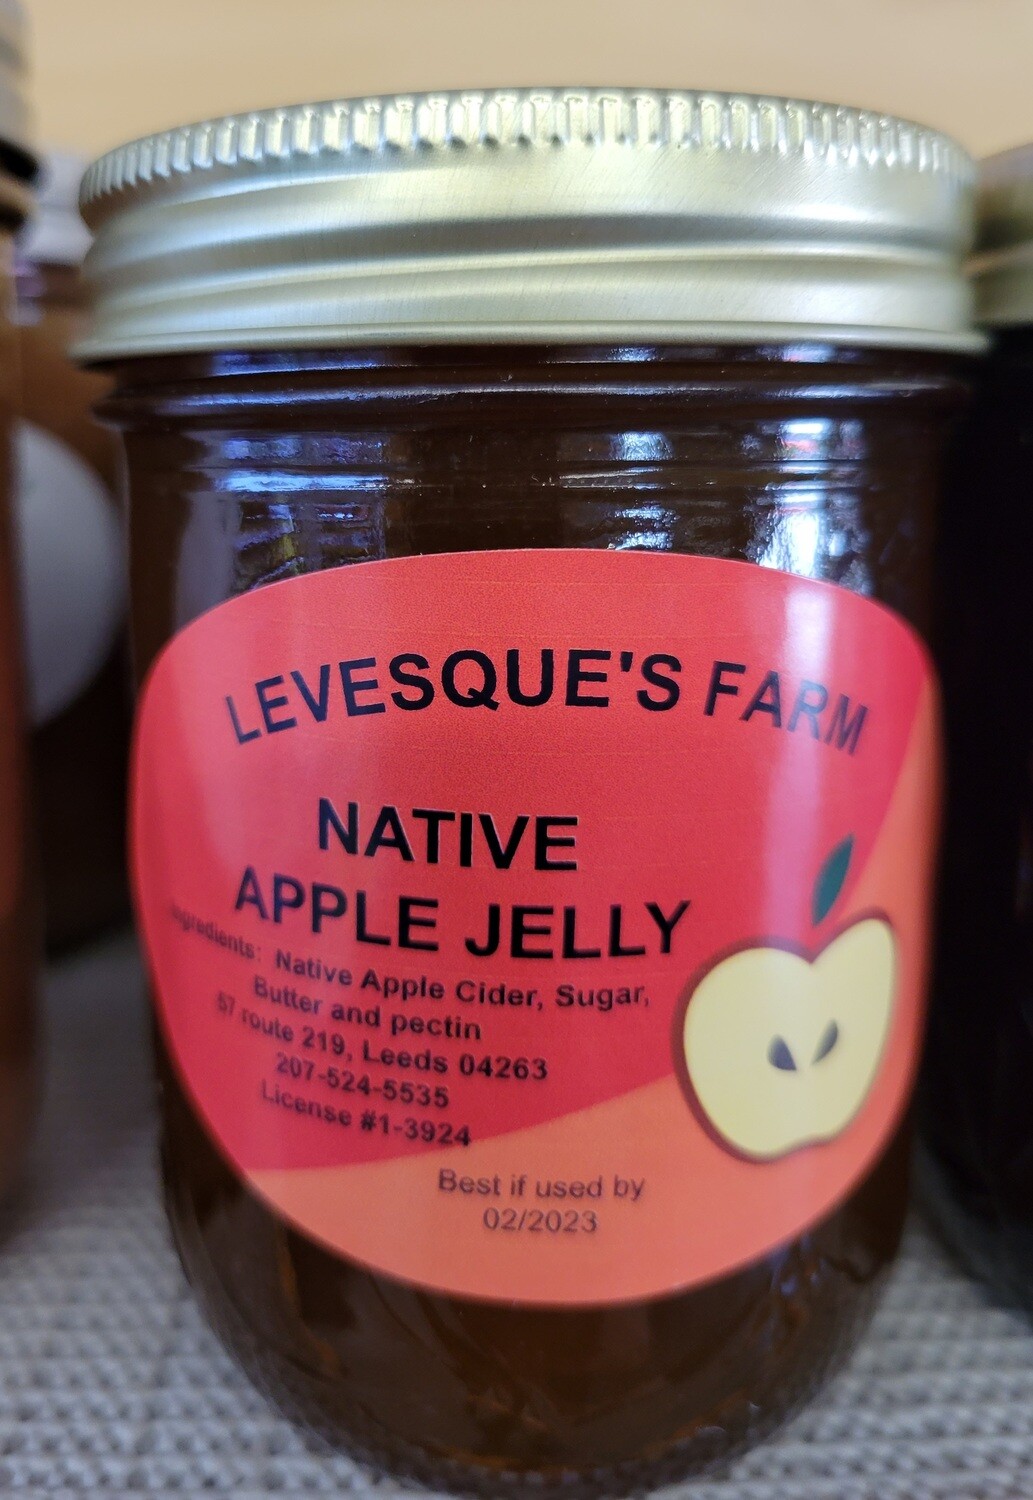 Levesque's Farm - Native Apple Jelly